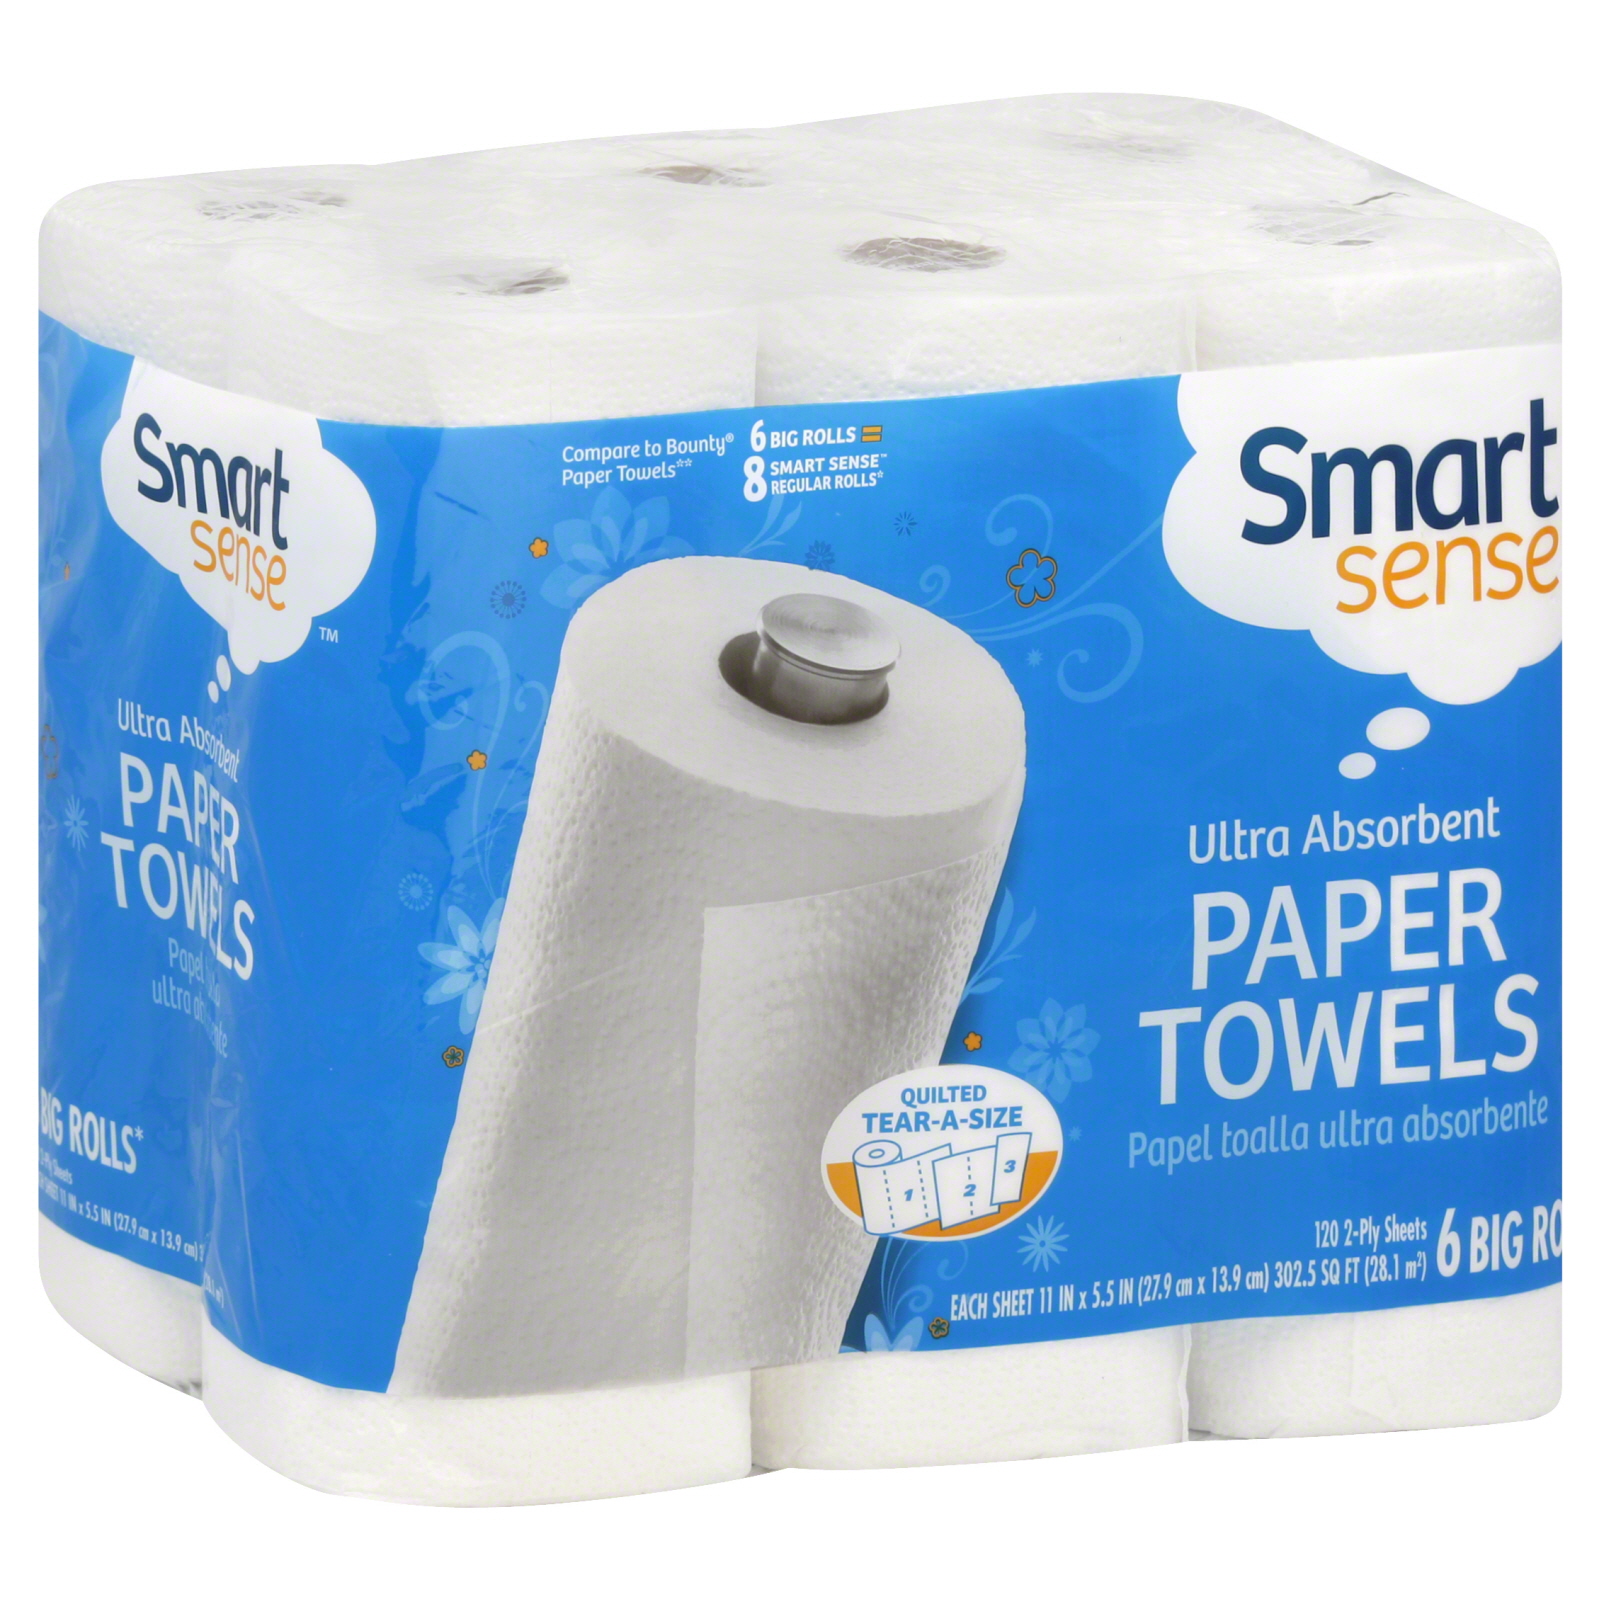 Smart Sense Paper Towels, Tear-A-Size, 2-Ply 6 rolls